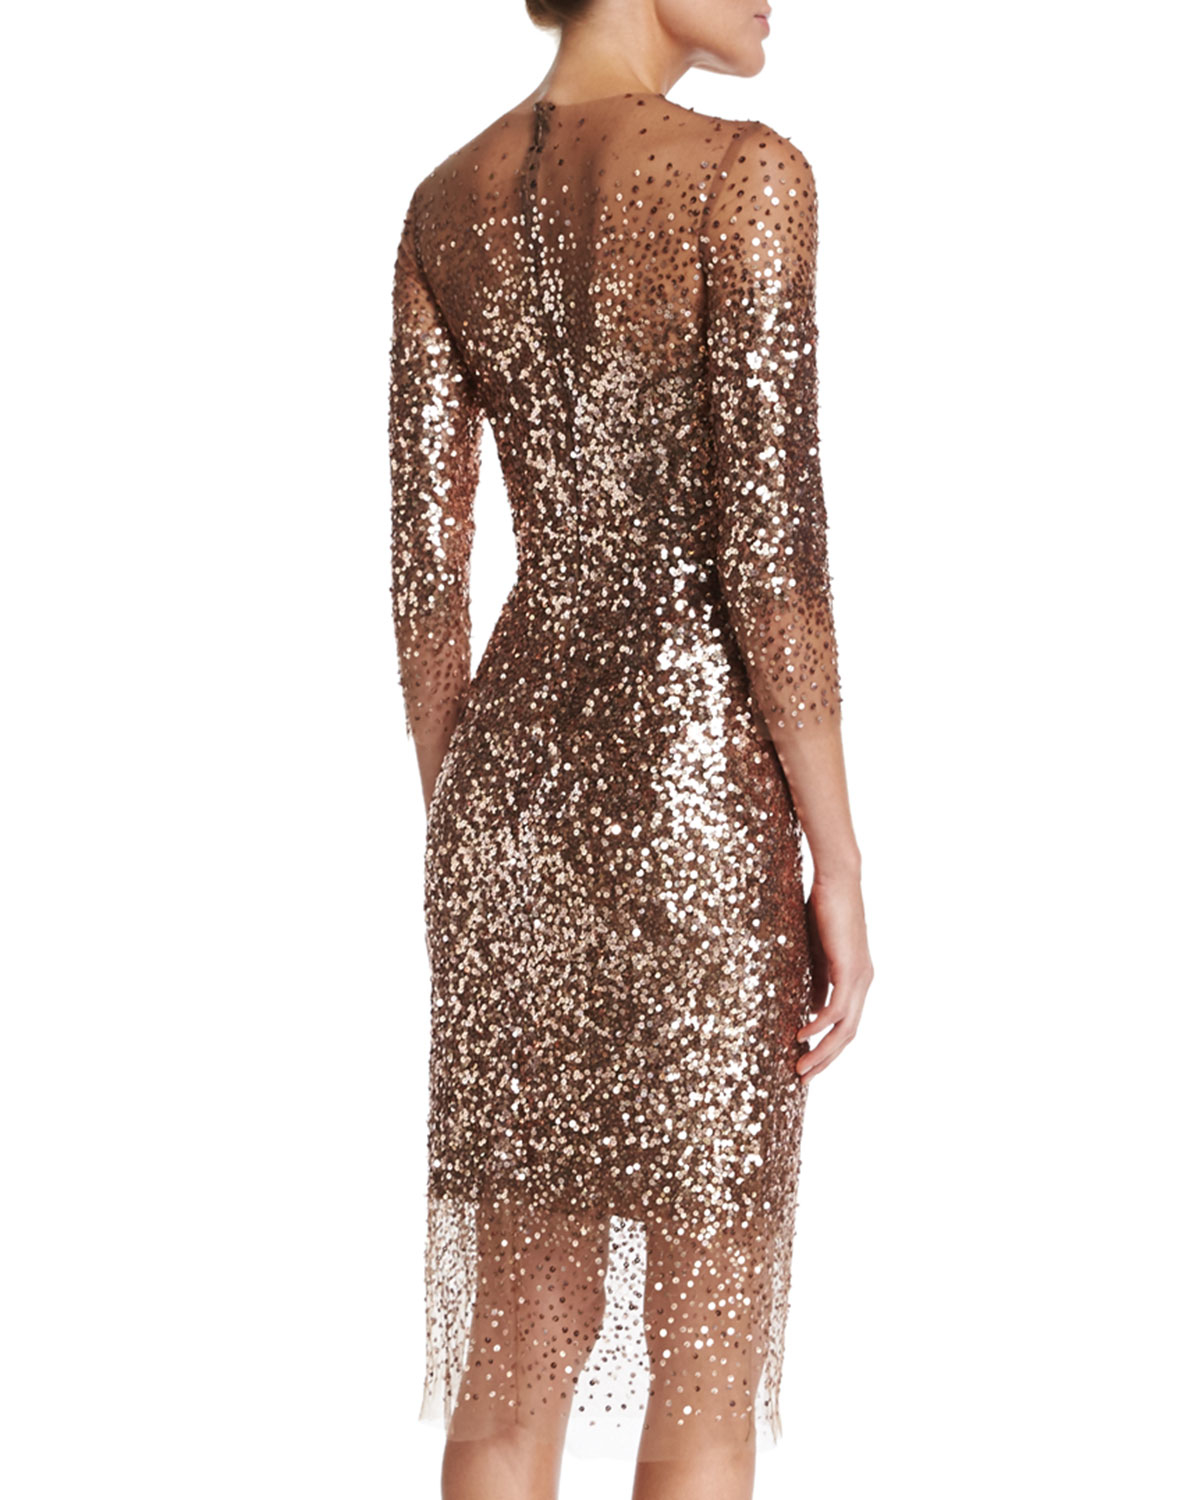 Lyst - Monique Lhuillier Sequin-Embellished Ombré Dress in Metallic